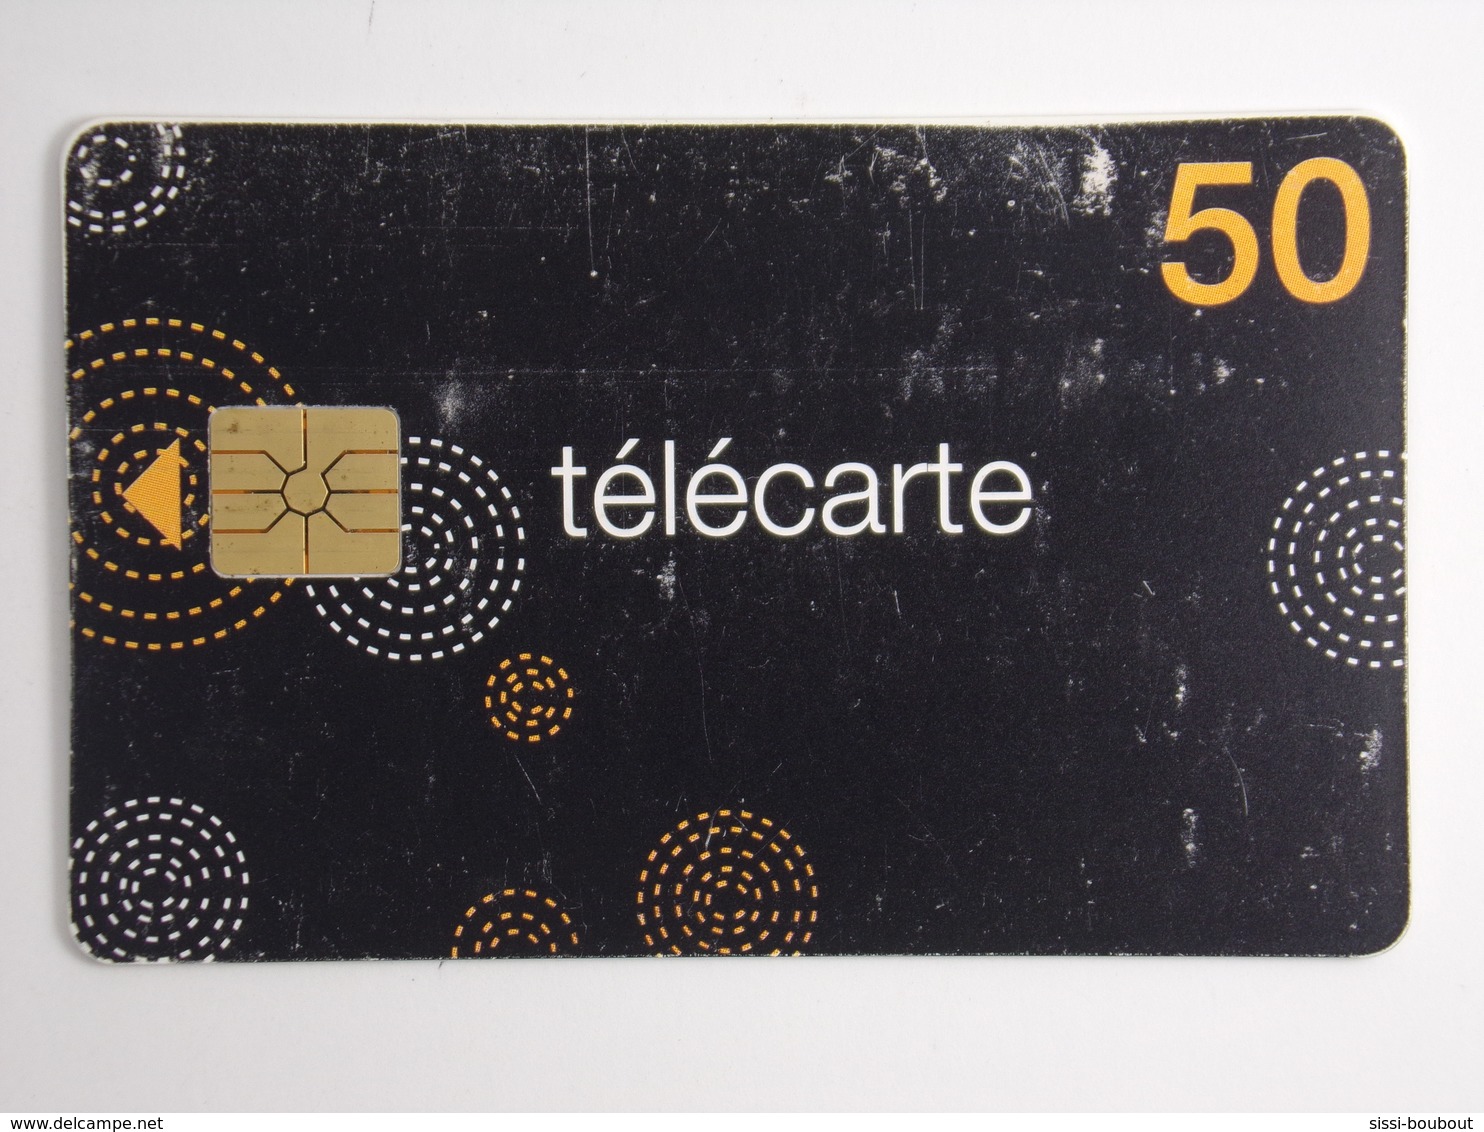 Télécarte - France Télécom - 2009 - Telecom Operators